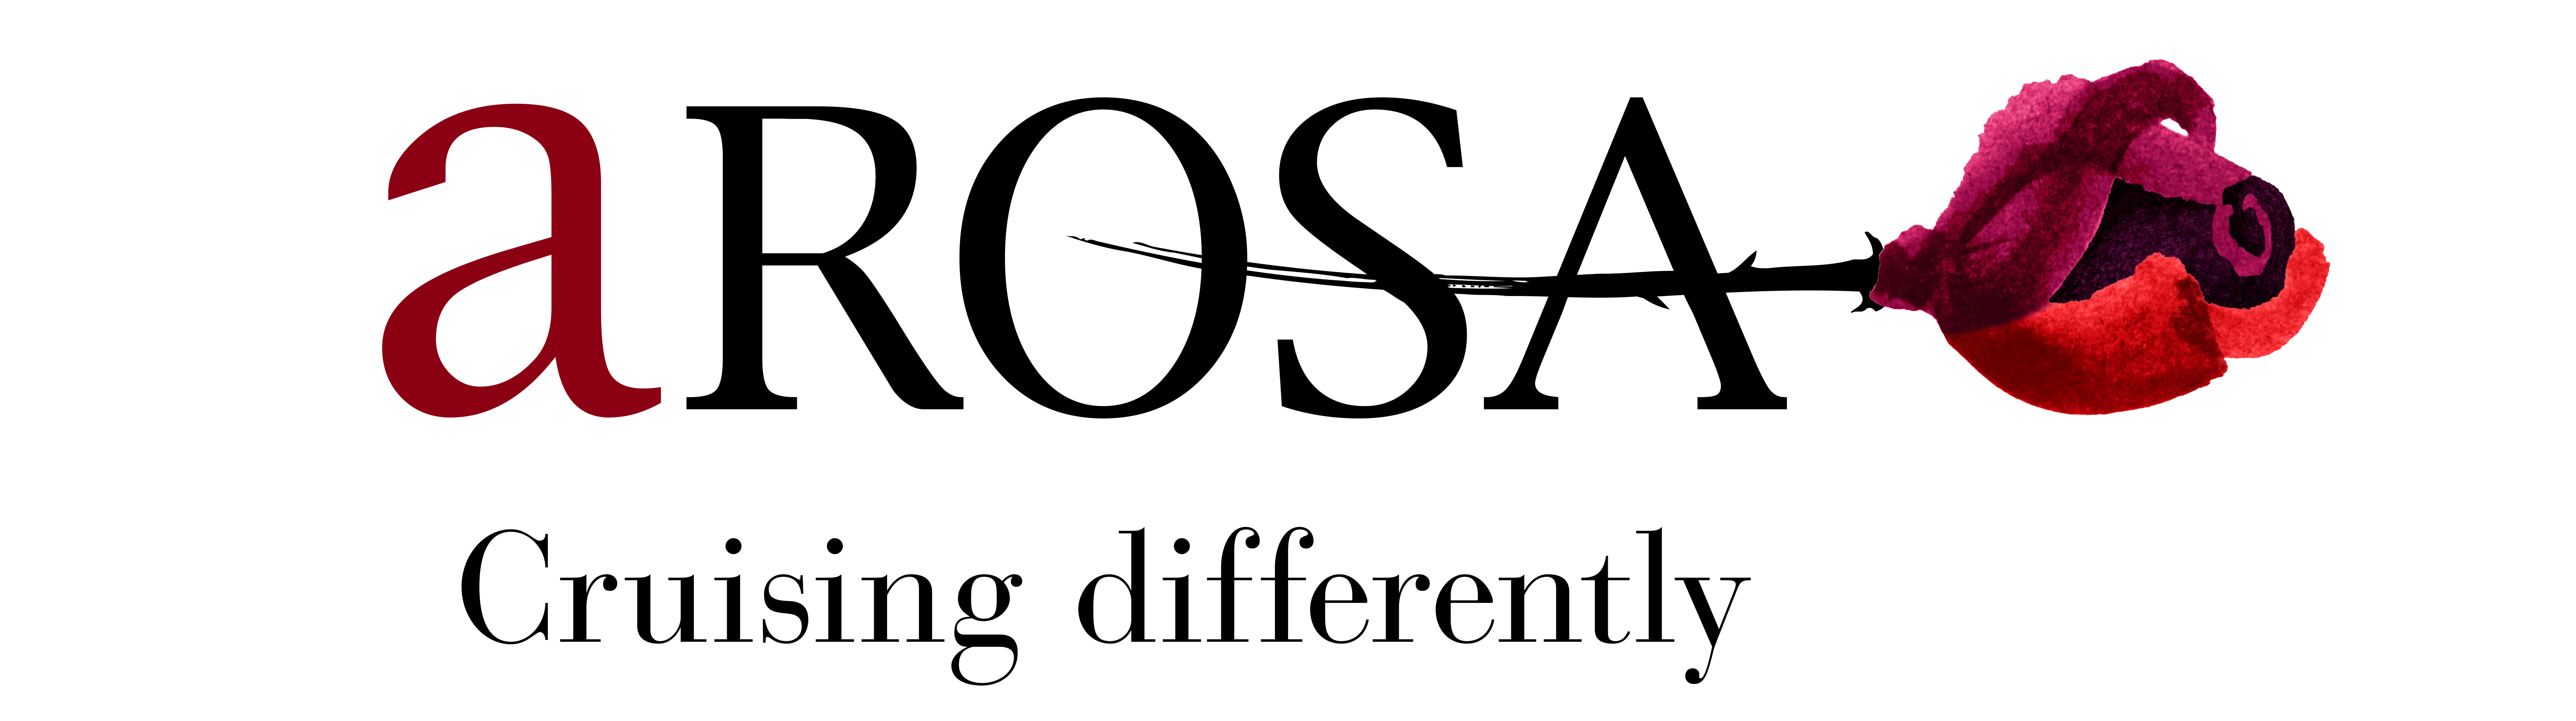 Ароса логотип